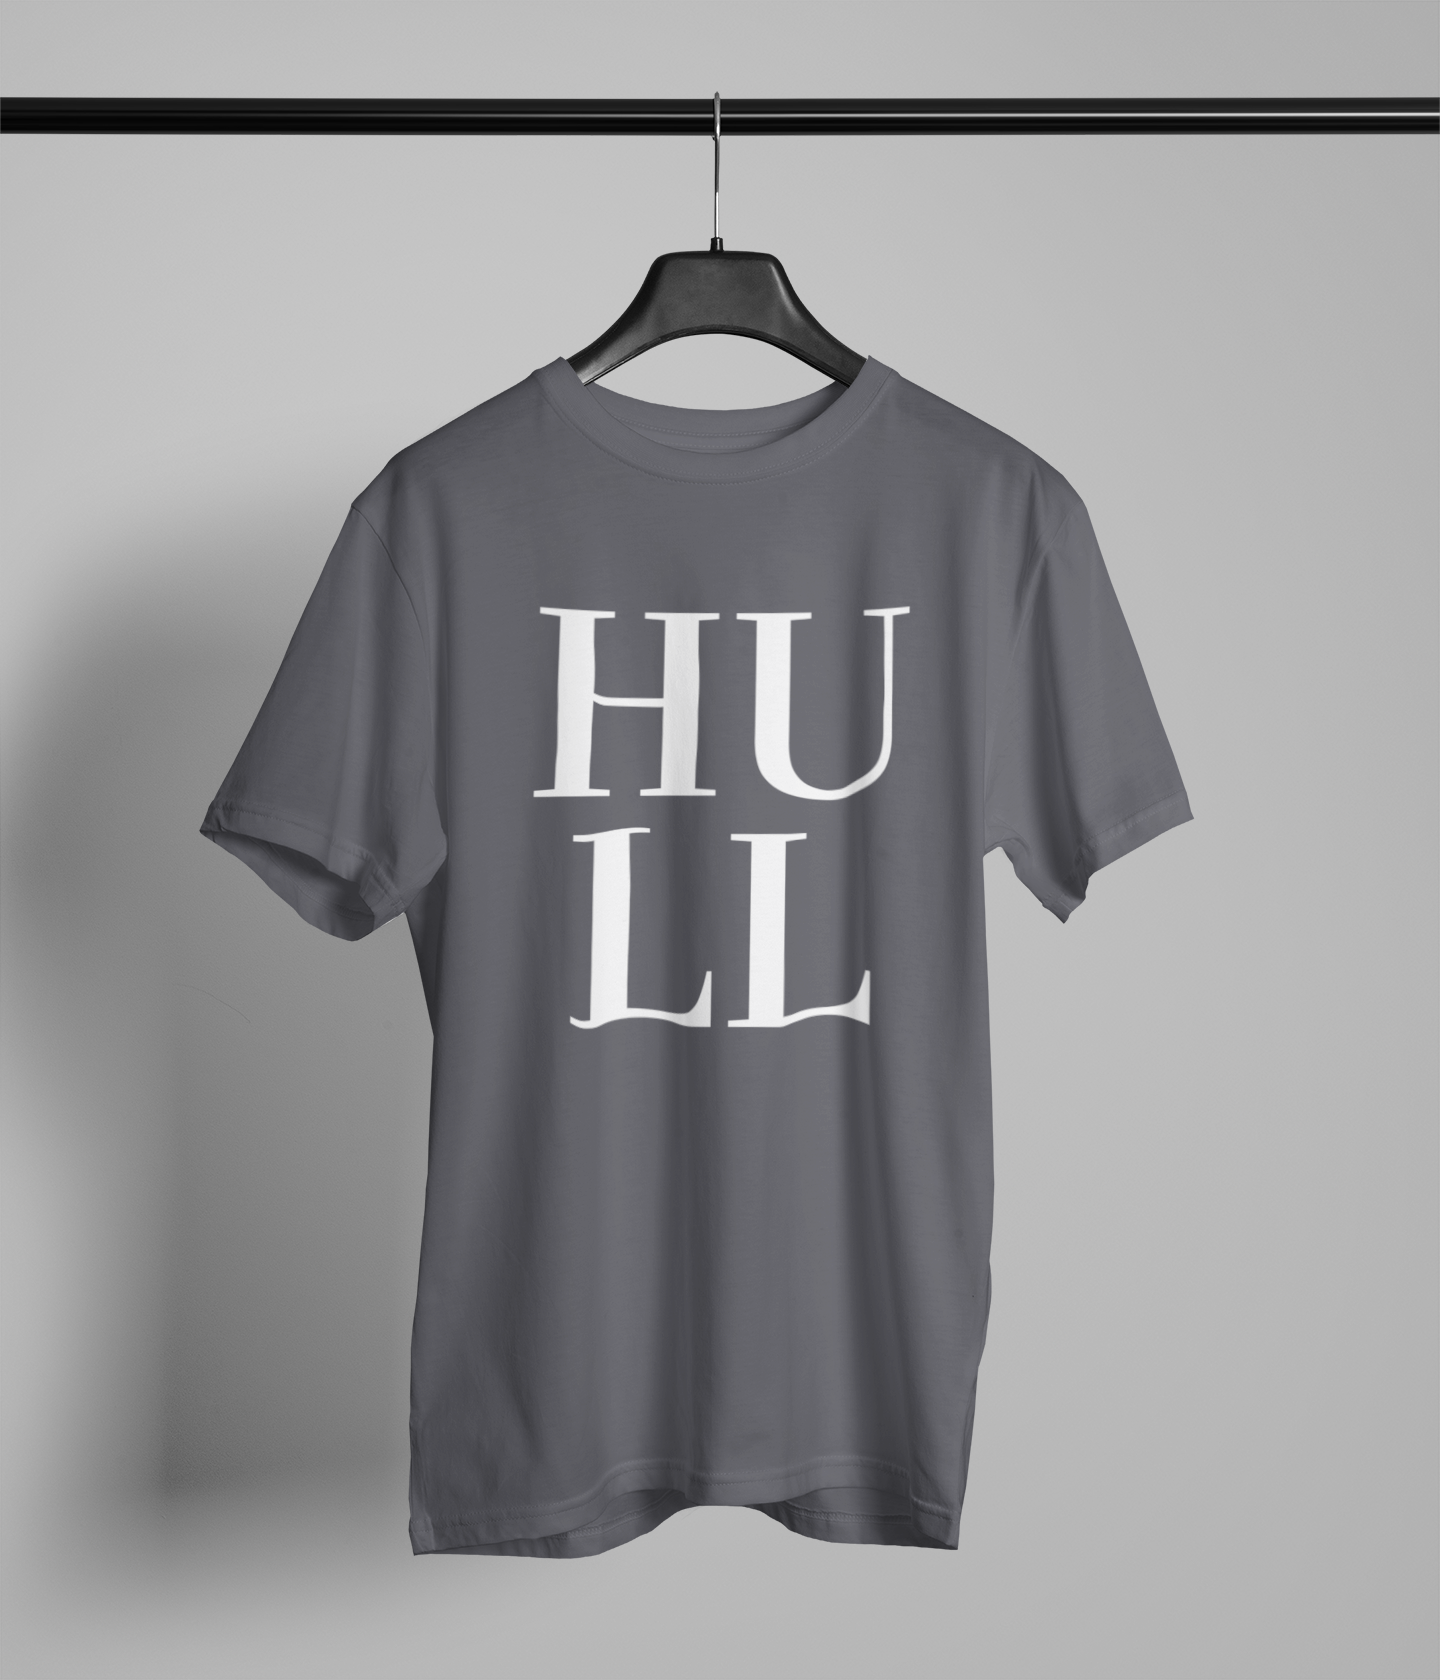 HULL T-Shirt Unisex